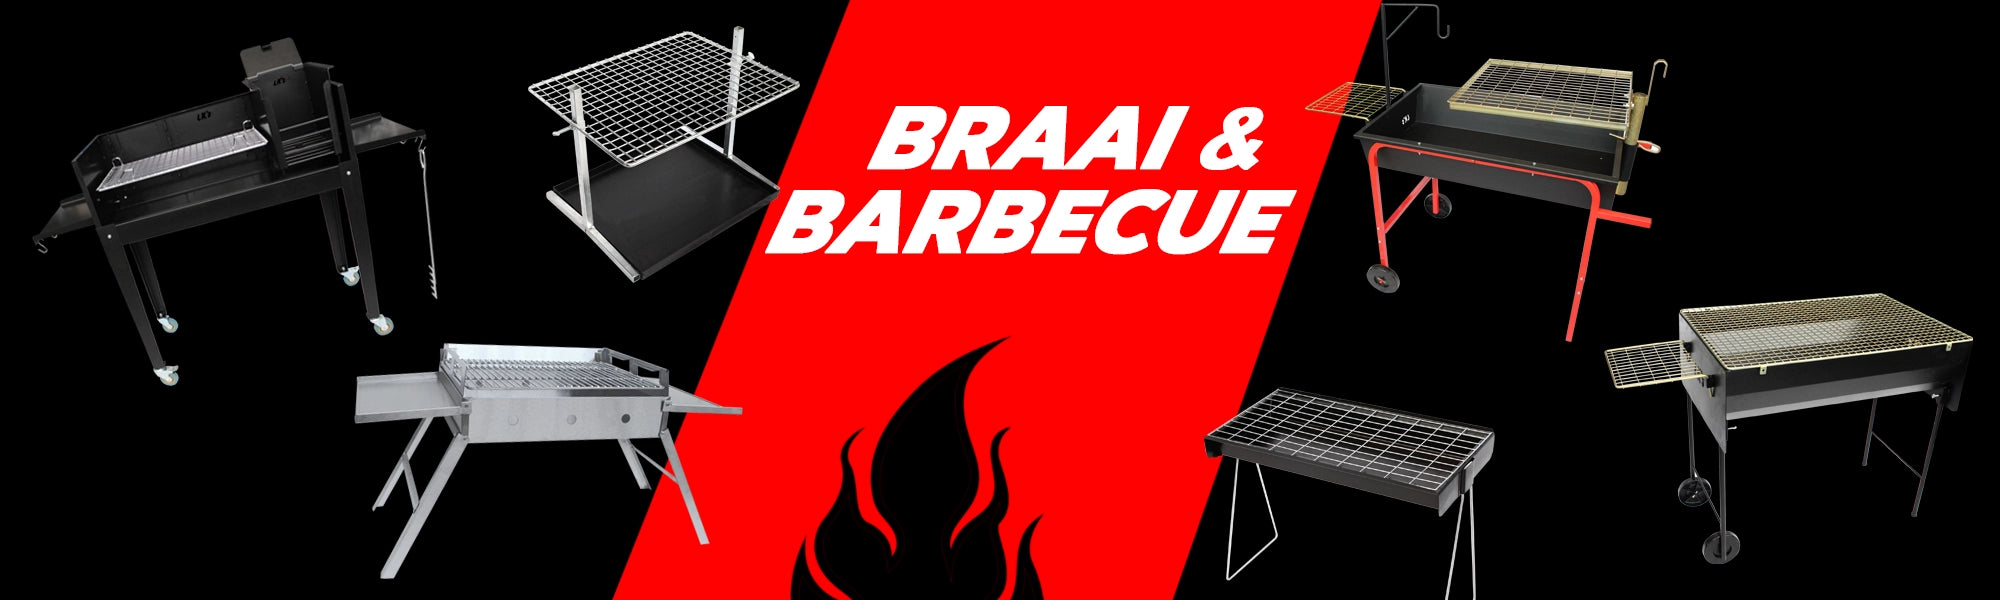 Braai and barbecue range from Explorer Essentials